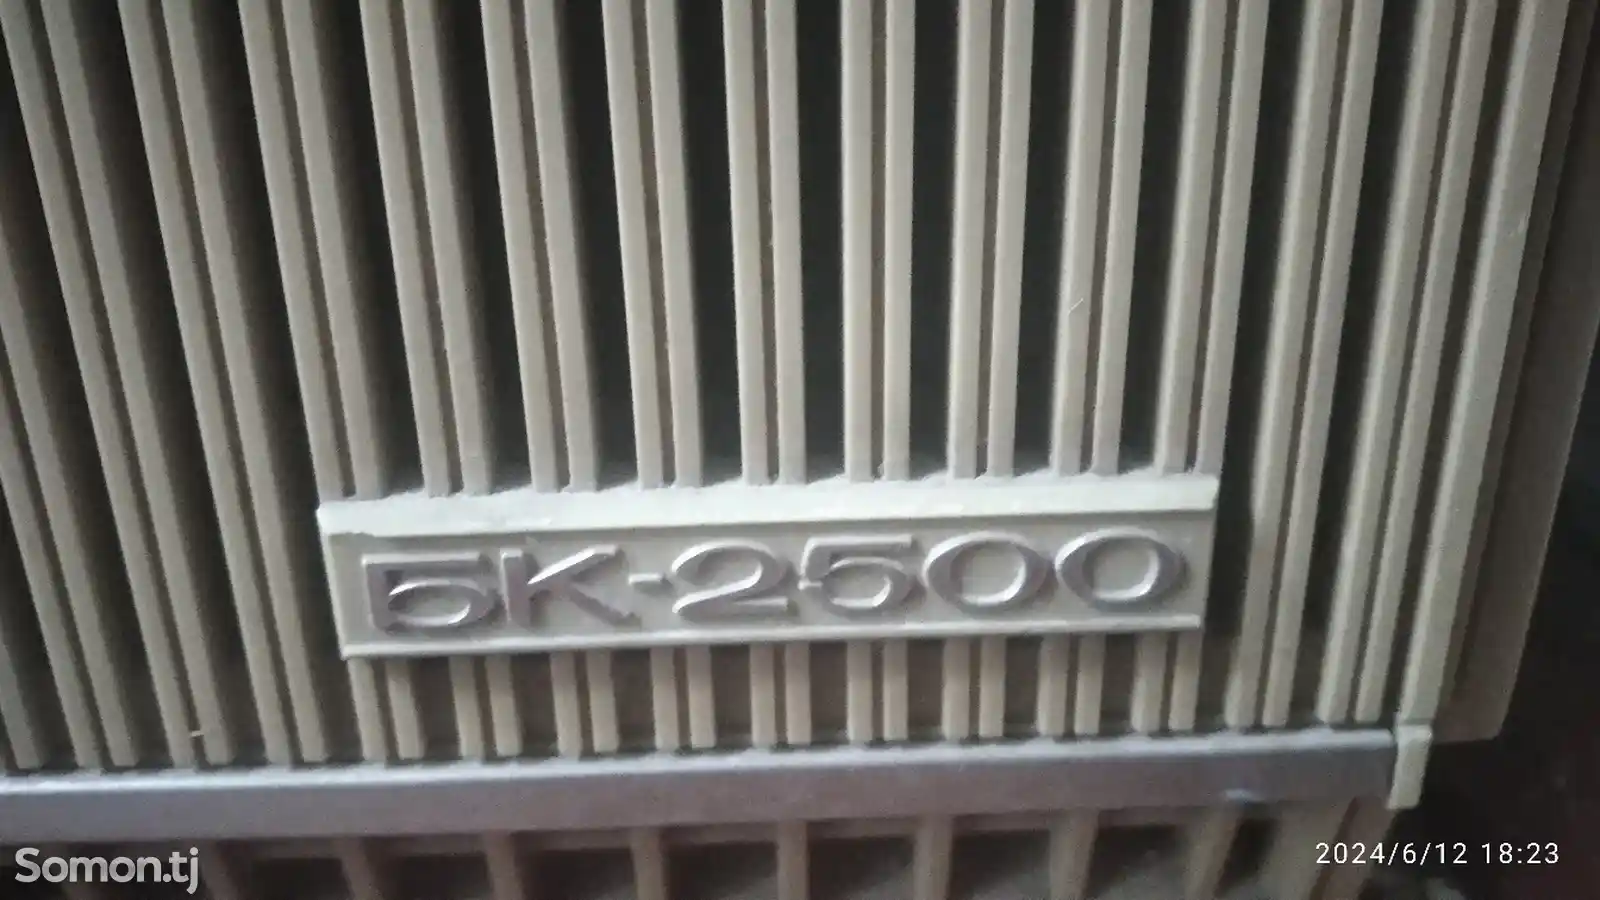 Кондиционер БК 2500-1